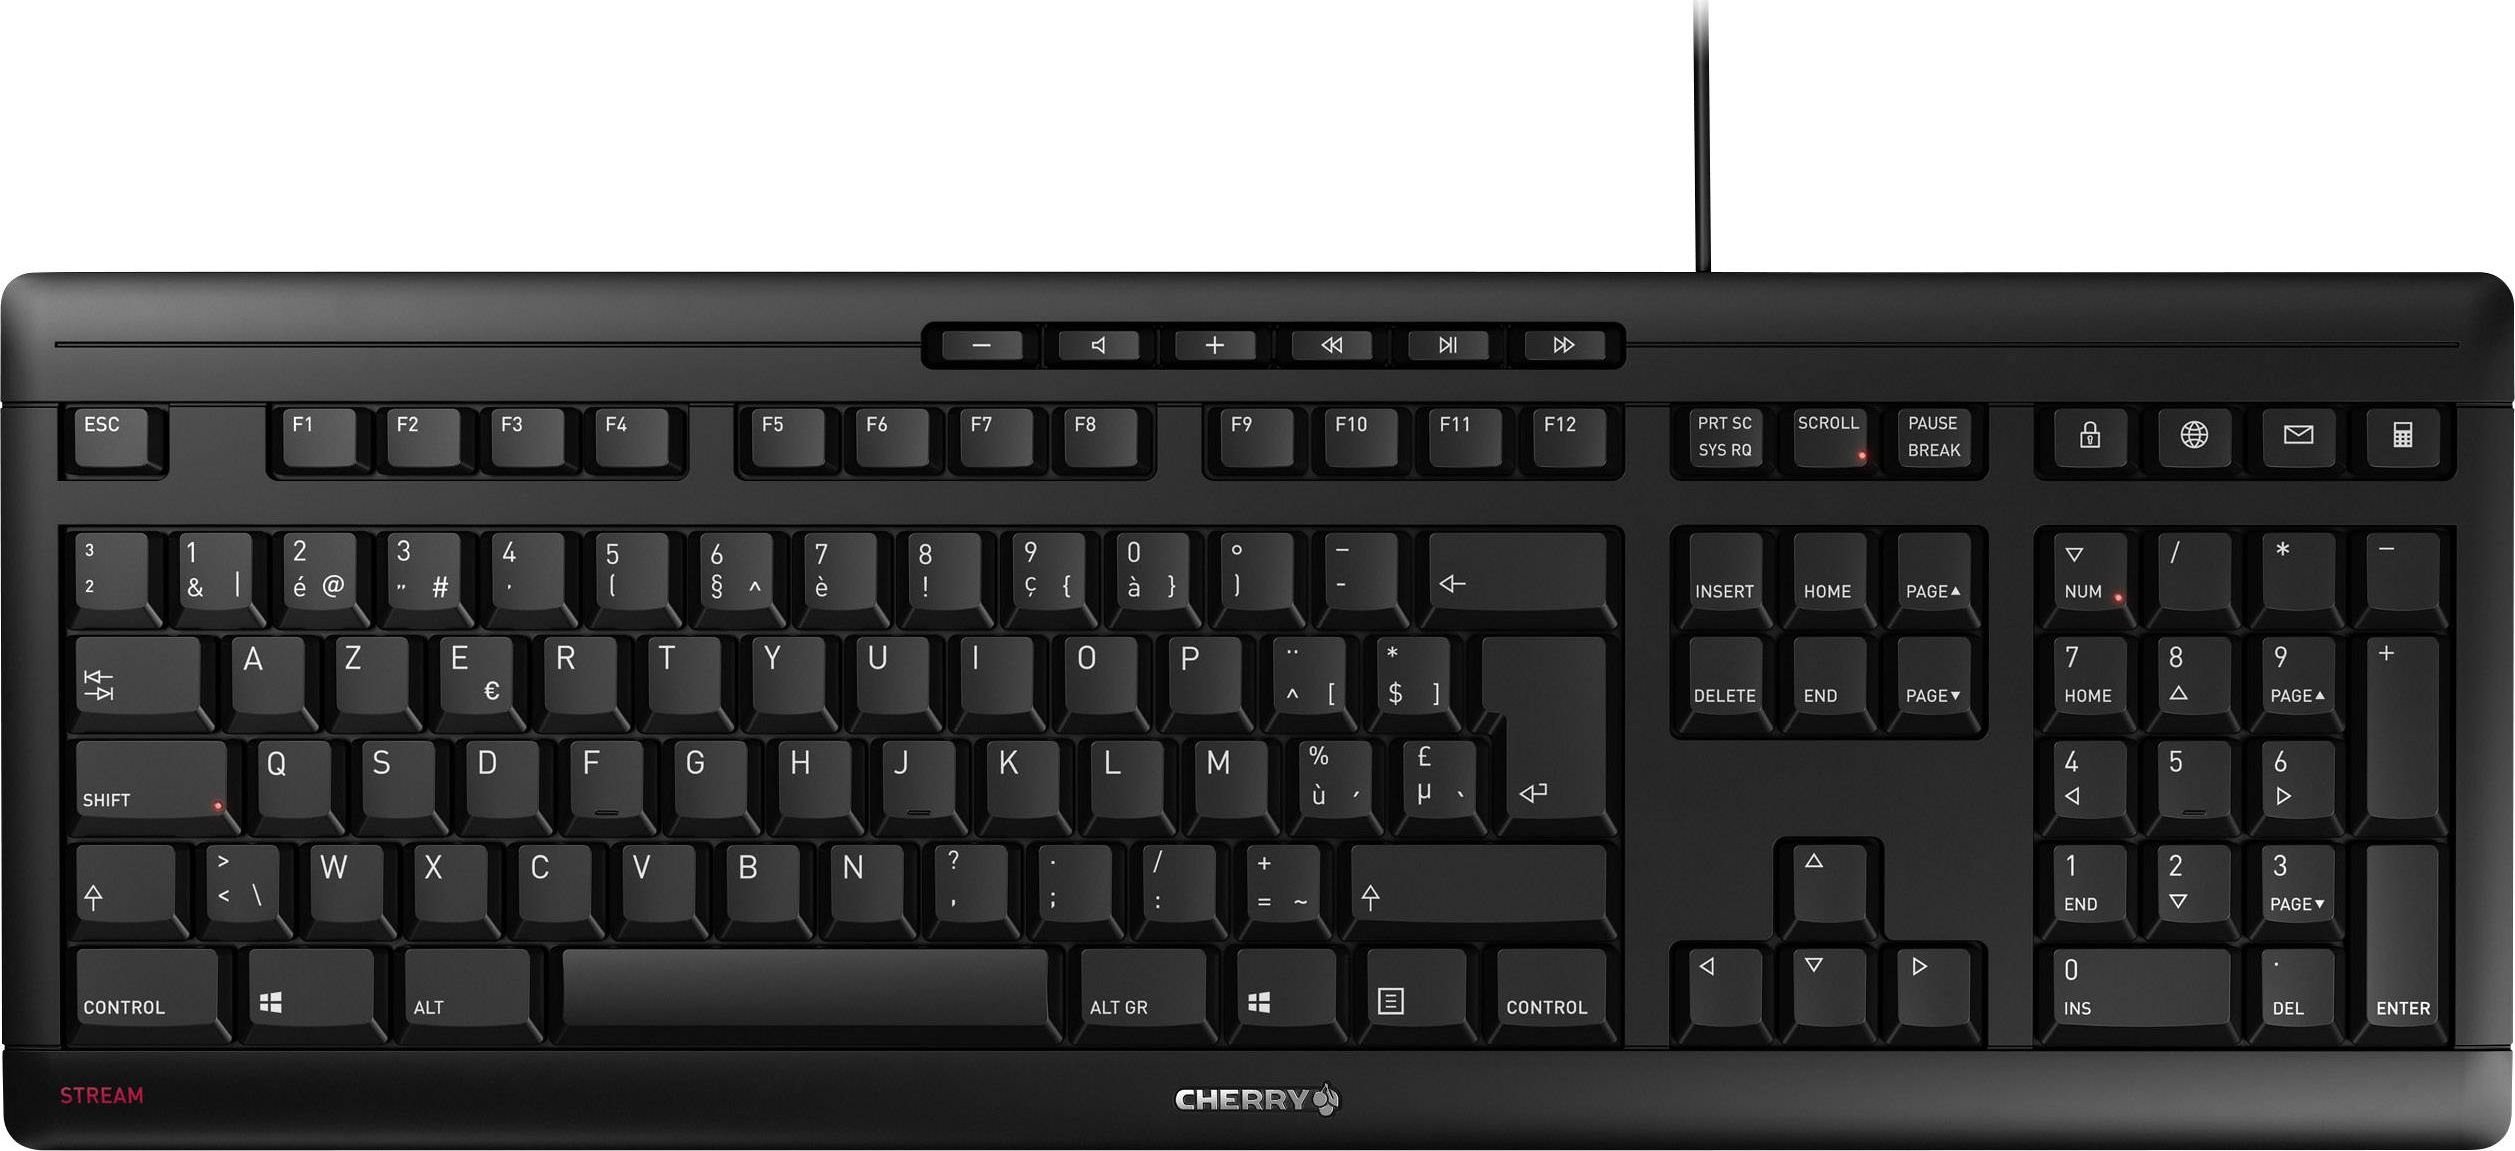 Tastatură Cherry Stream cu fir negru BE (JK-8500BE-2)